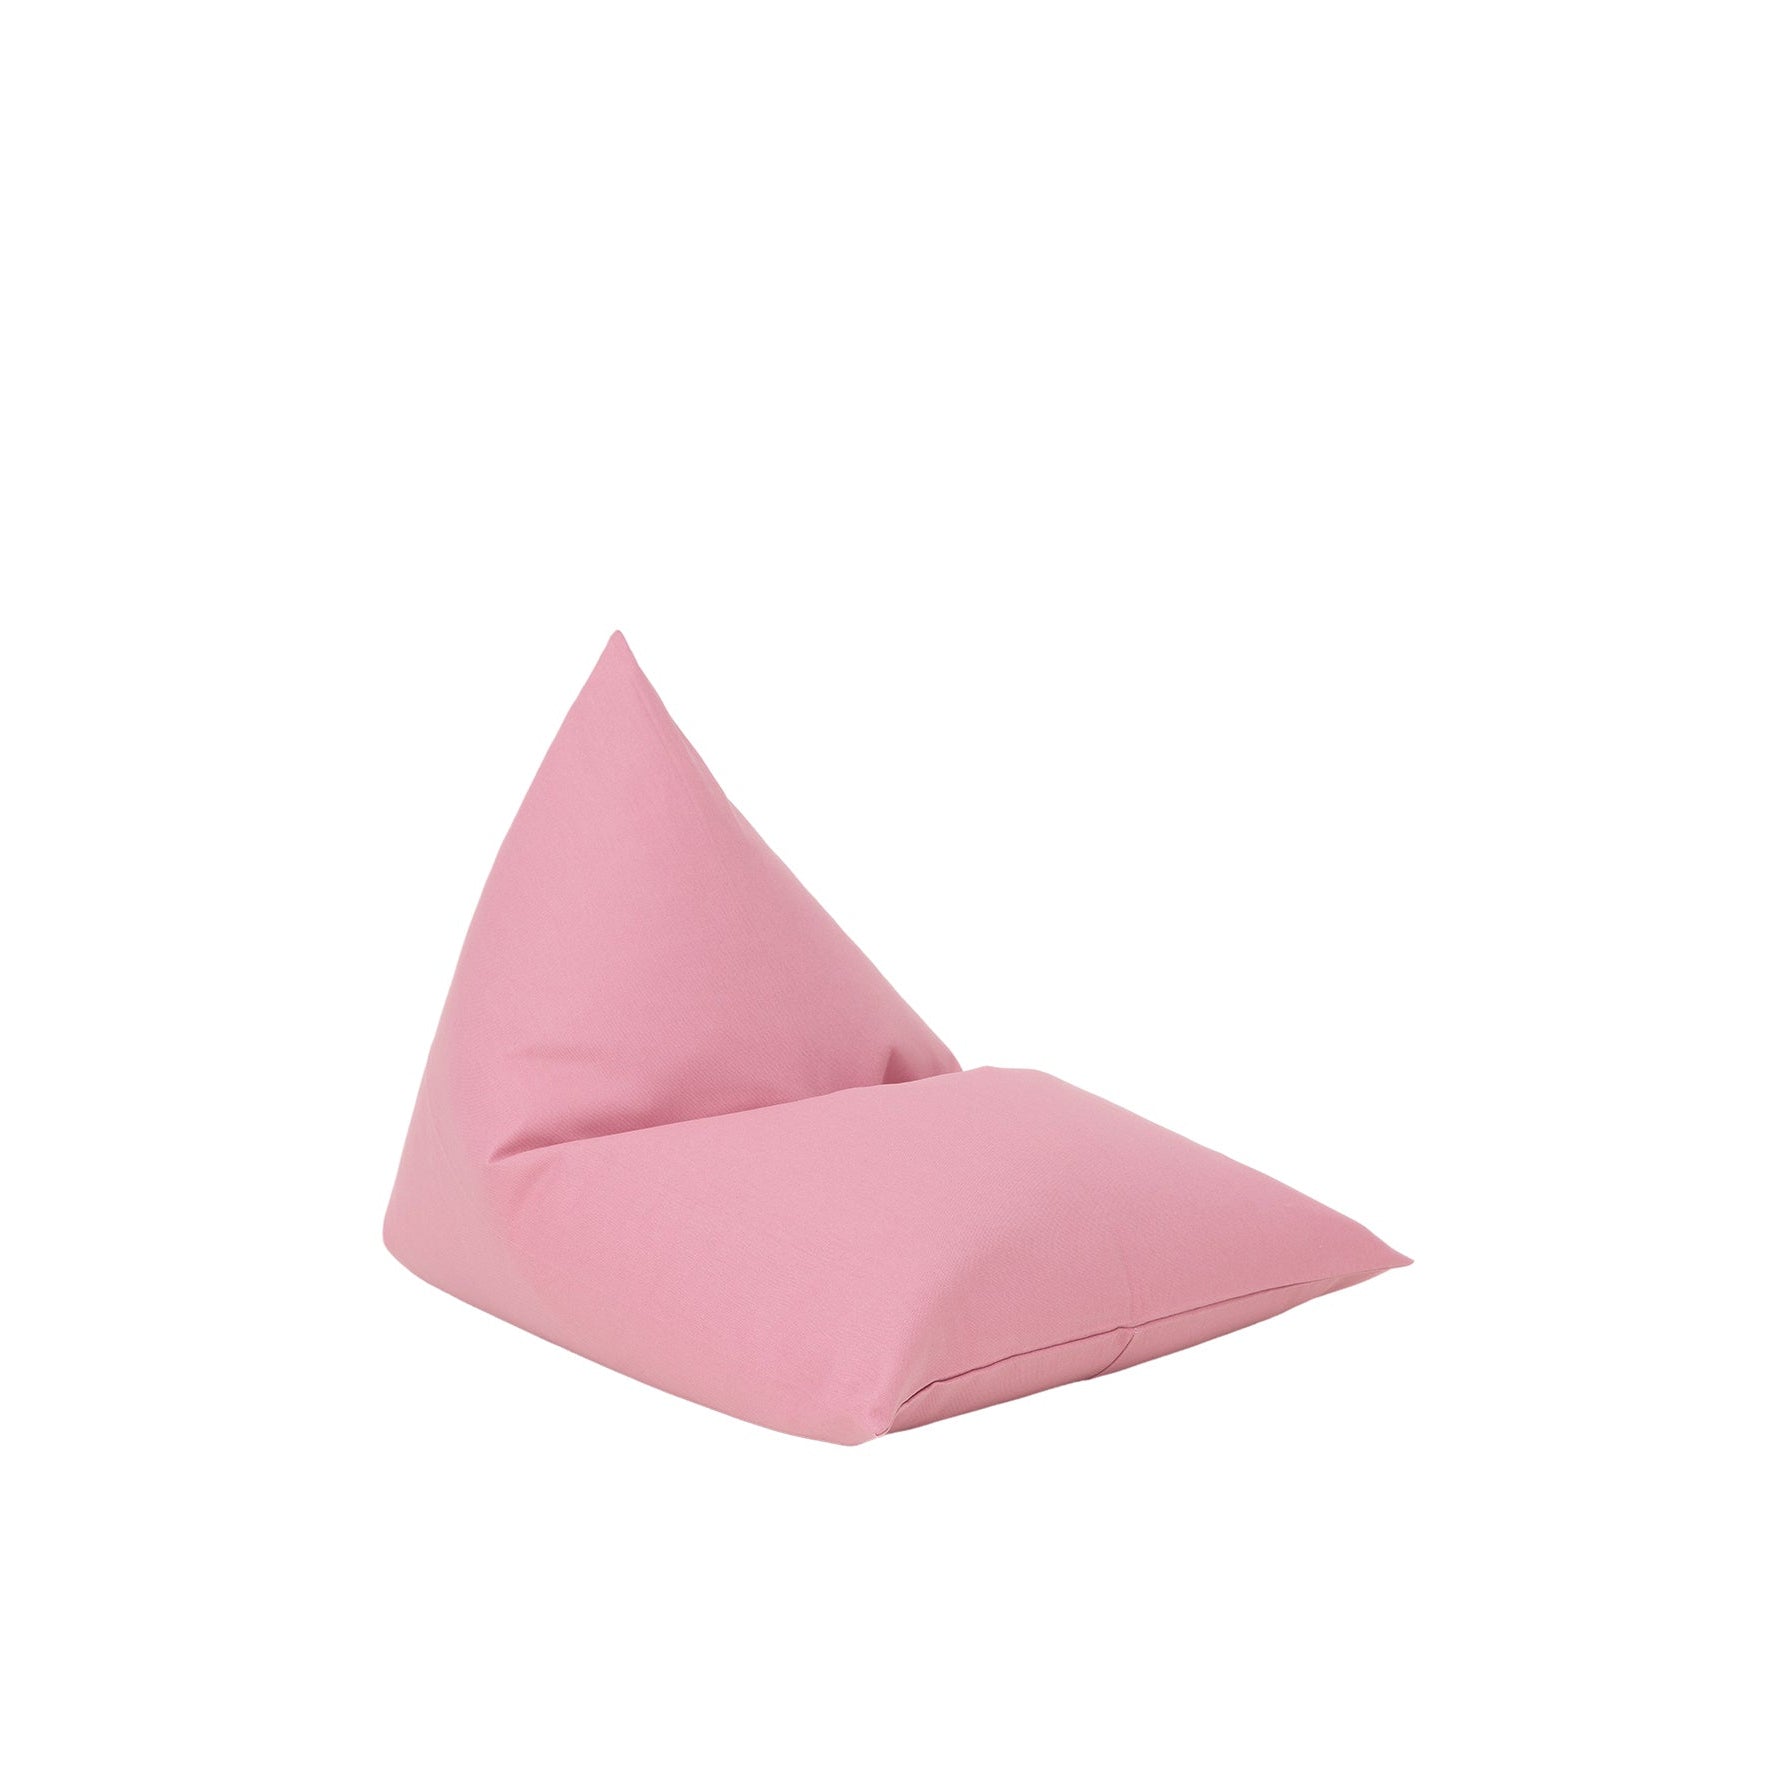 Wigiwama Plain Blush Pink Classy Beanbag at Rugs by Roo